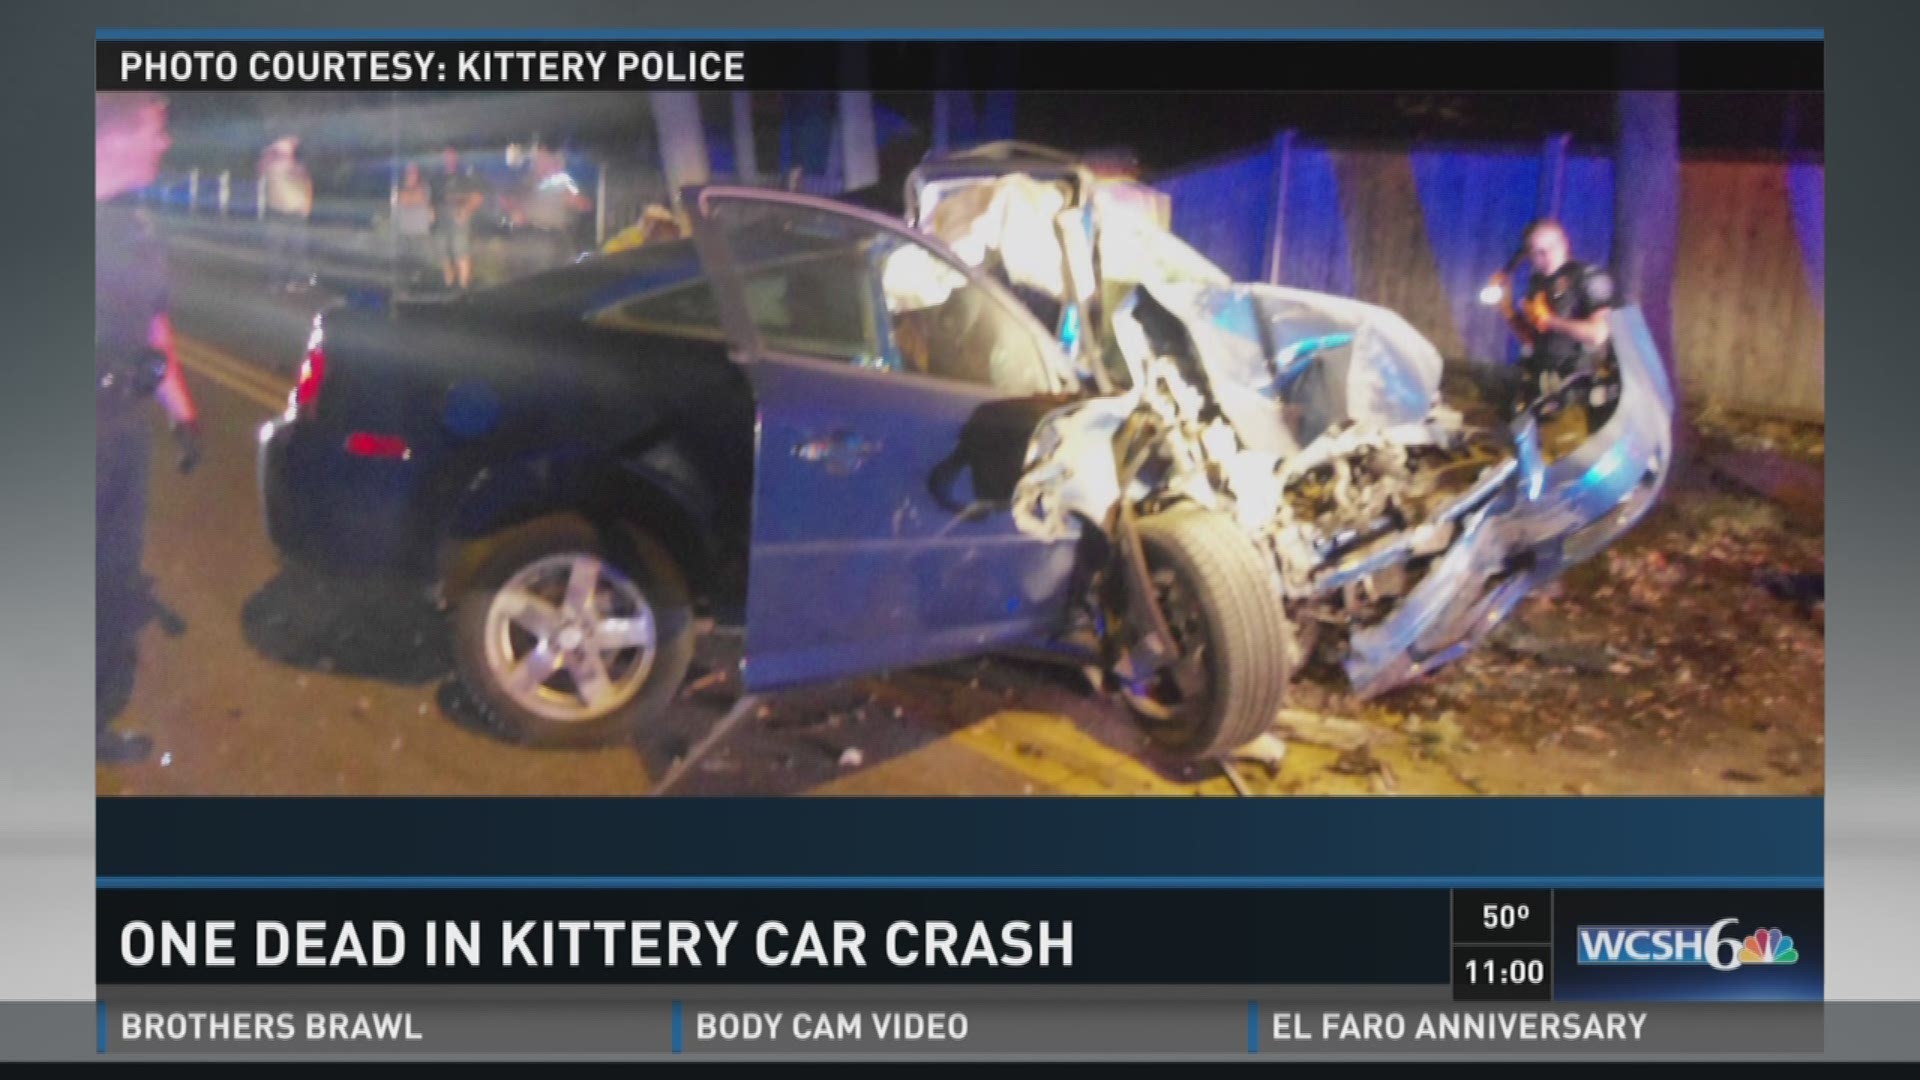 One dead in Kittery car crash